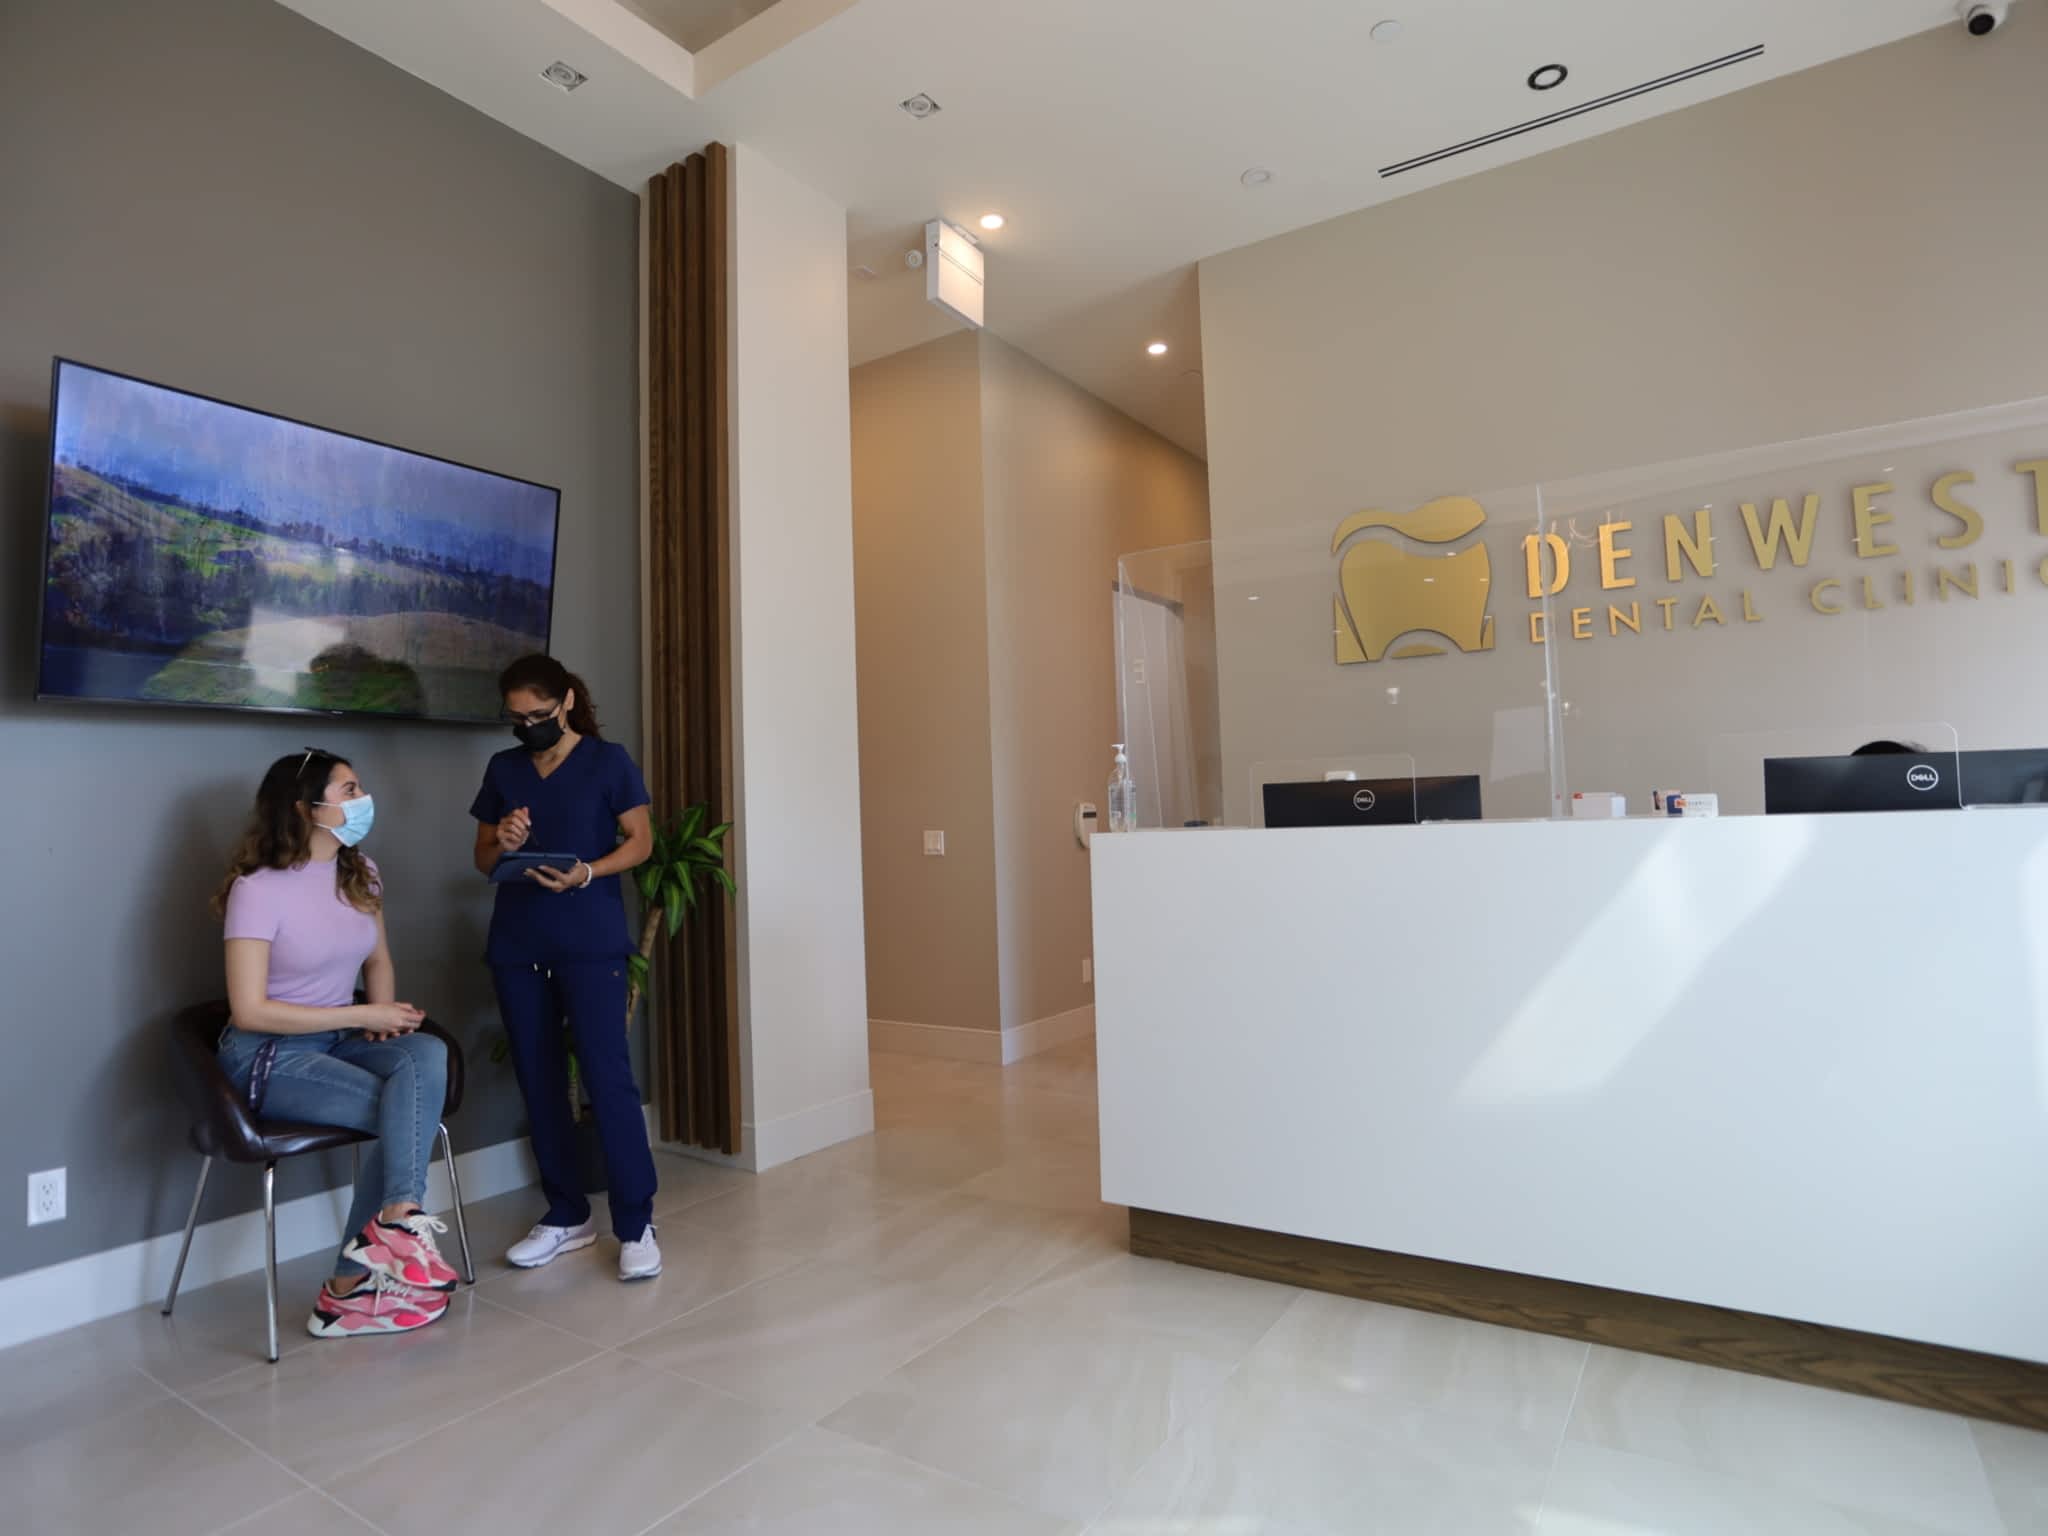 photo Denwest Dental Clinic